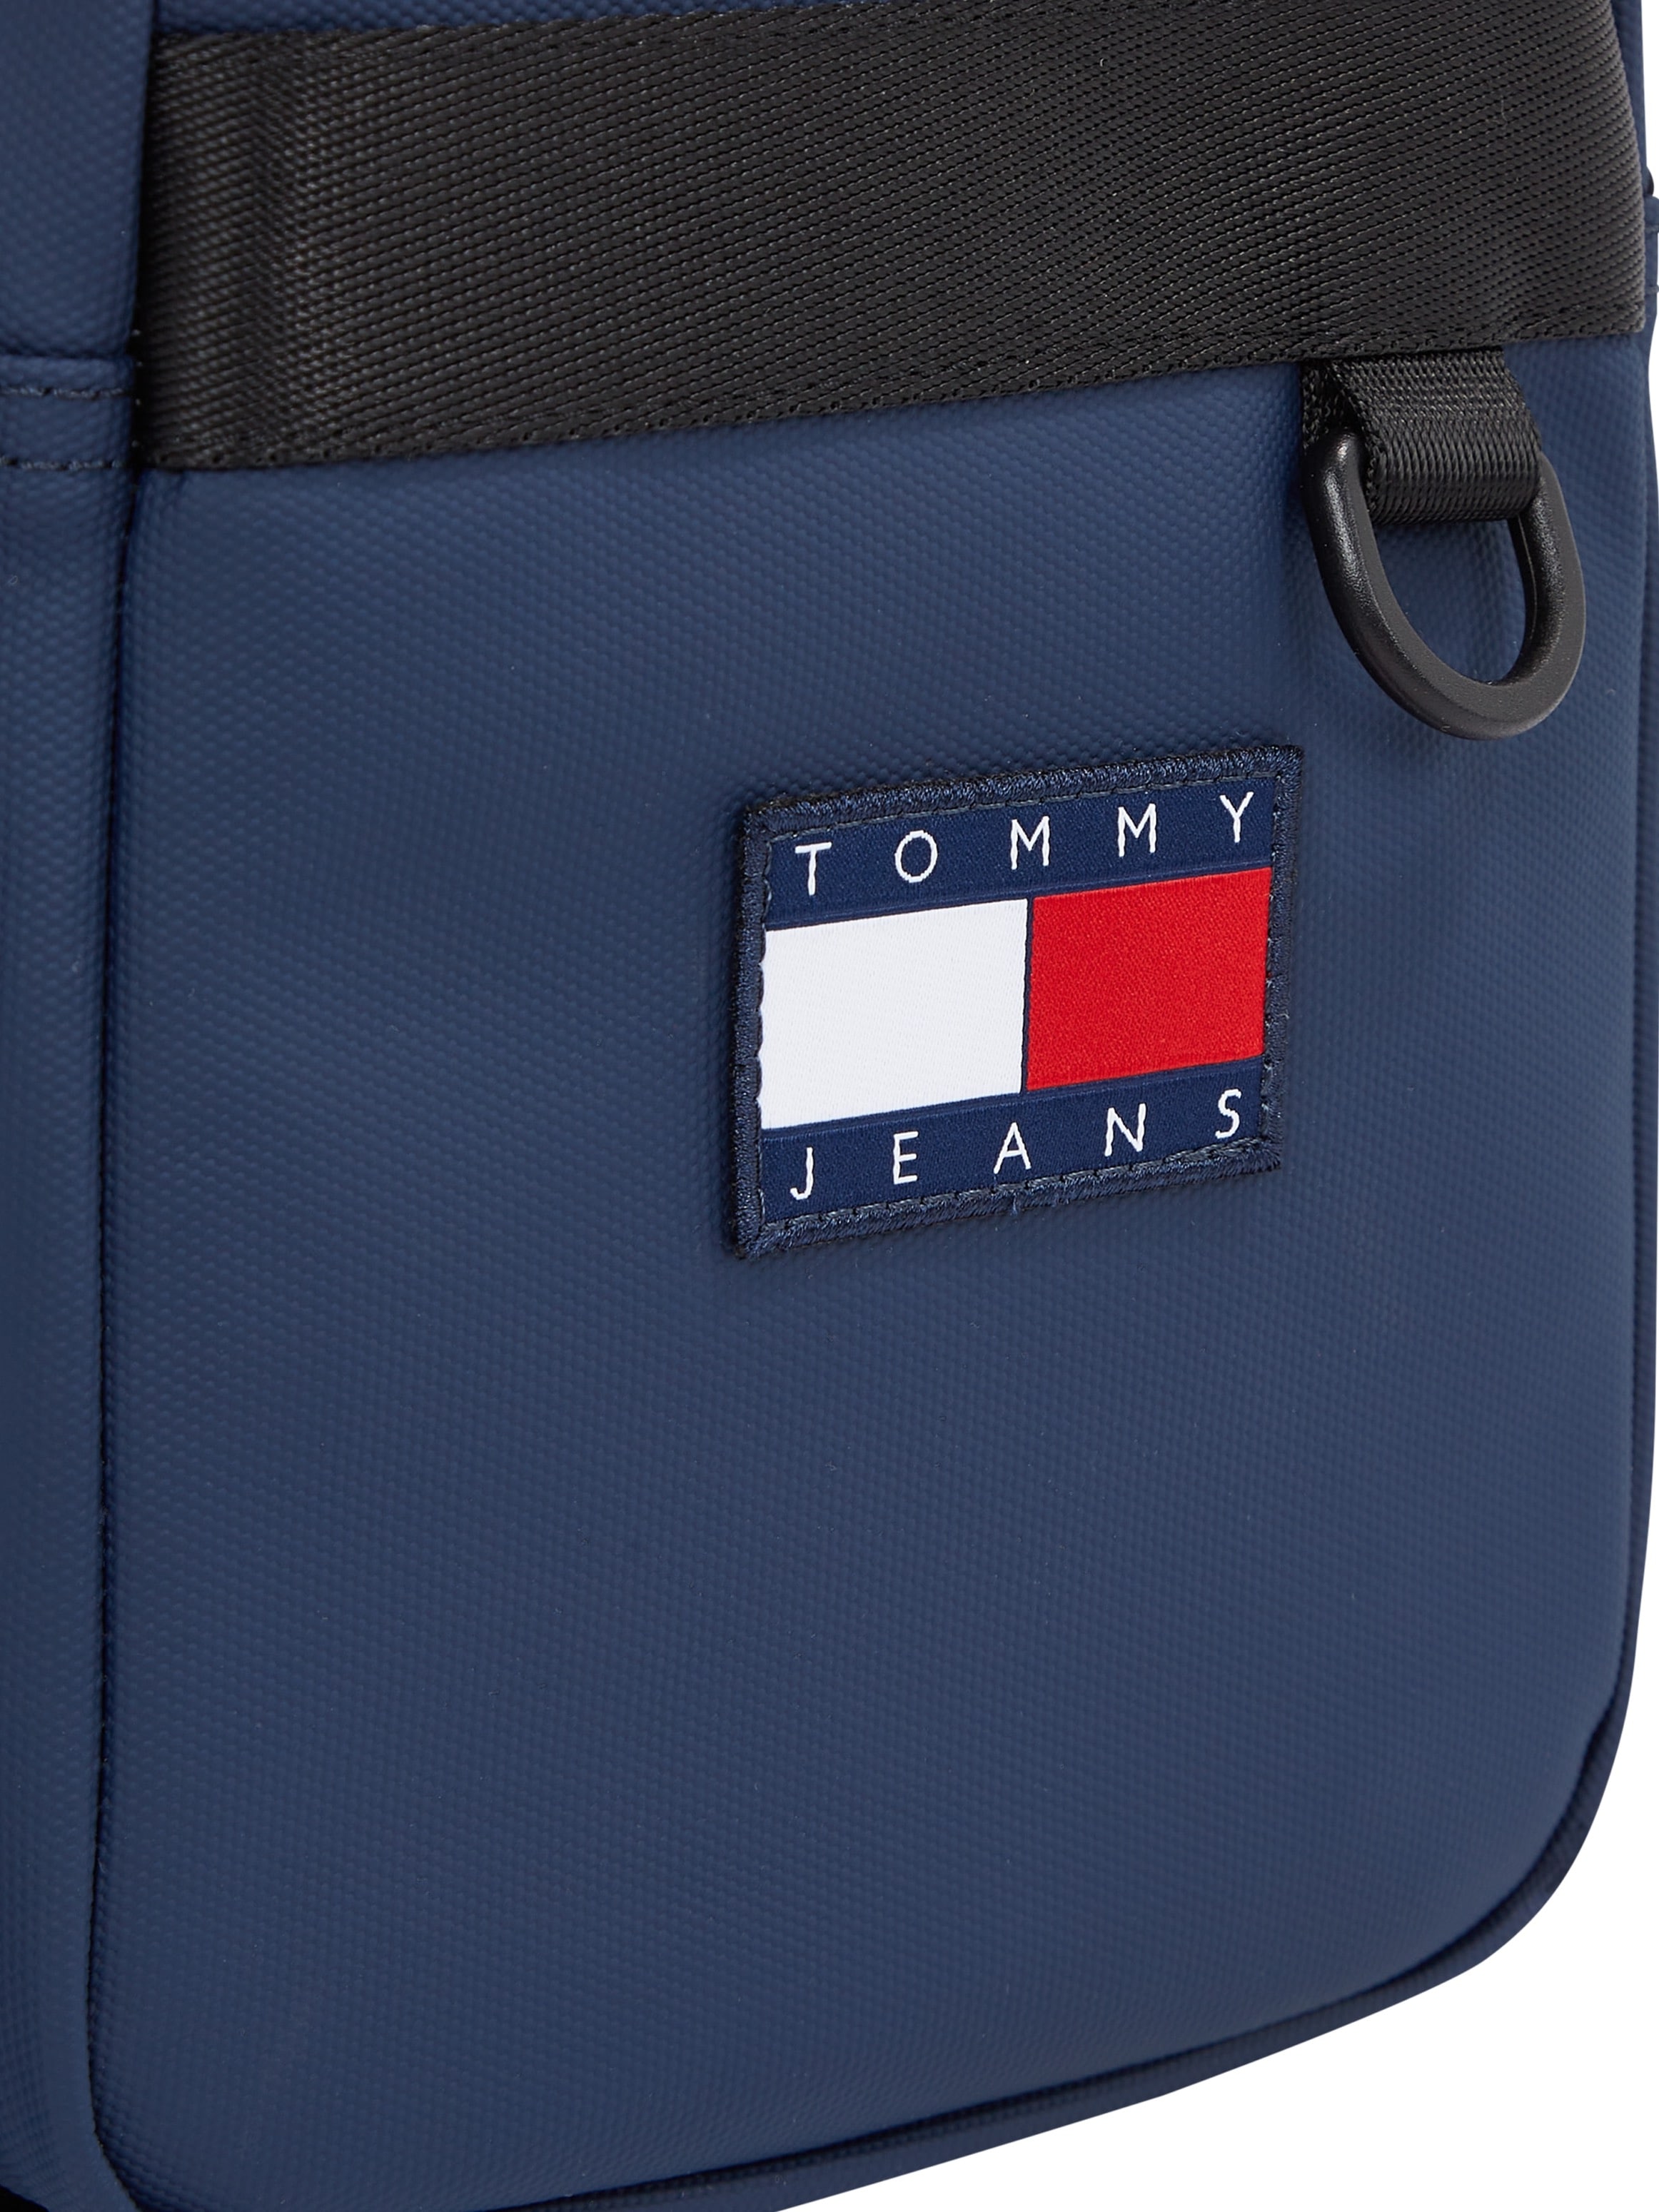 Tommy Jeans Mini Bag »TJM DLY ELEV REPORTER«, Herrenschultertasche Tasche Herren Umhängetasche